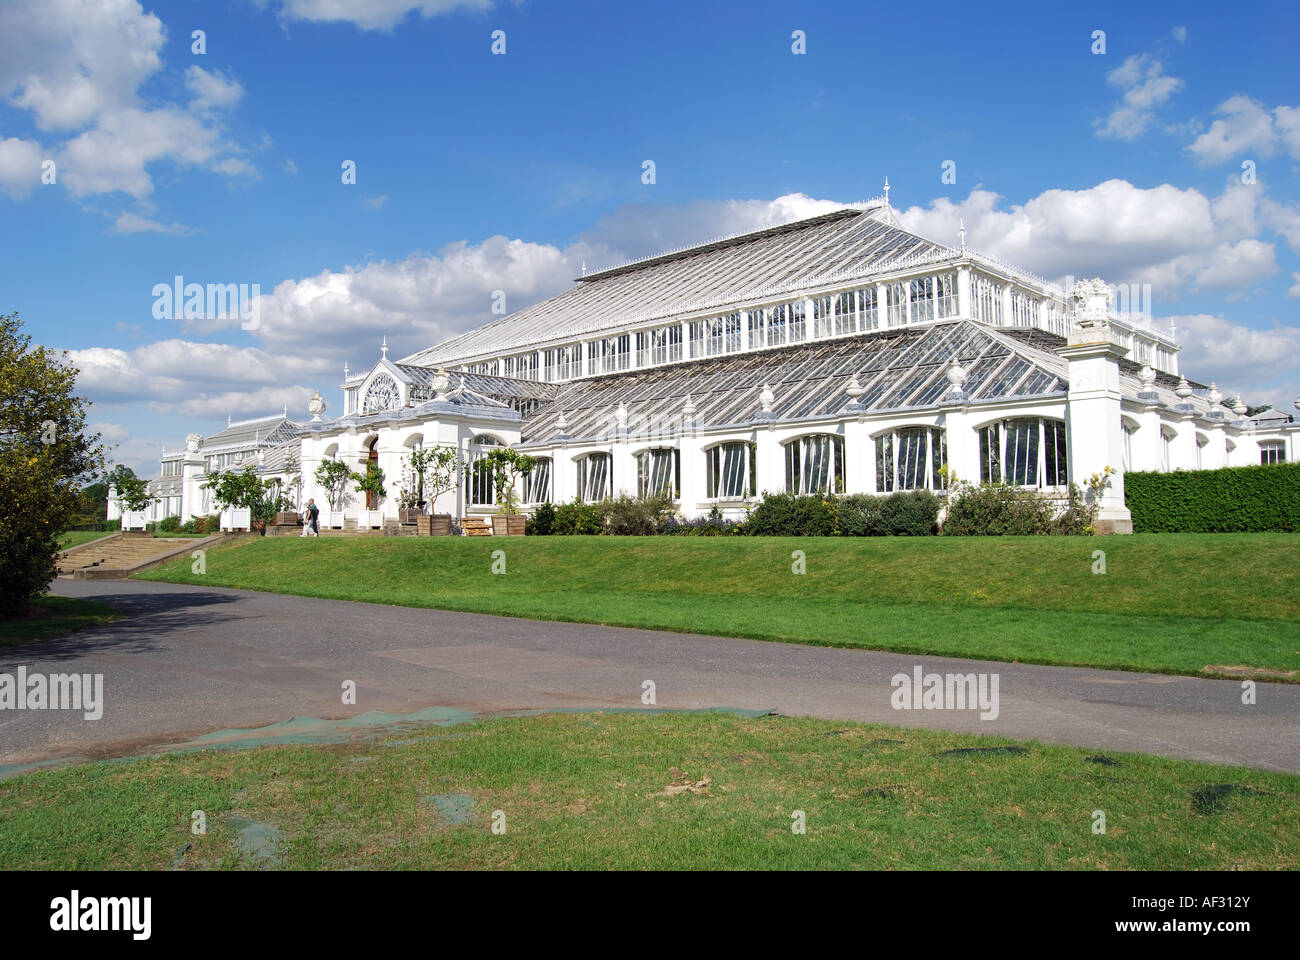 Tempéré House, Royal Botanical Gardens, Kew, London Borough of Richmond upon Thames, Greater London, Angleterre, Royaume-Uni Banque D'Images